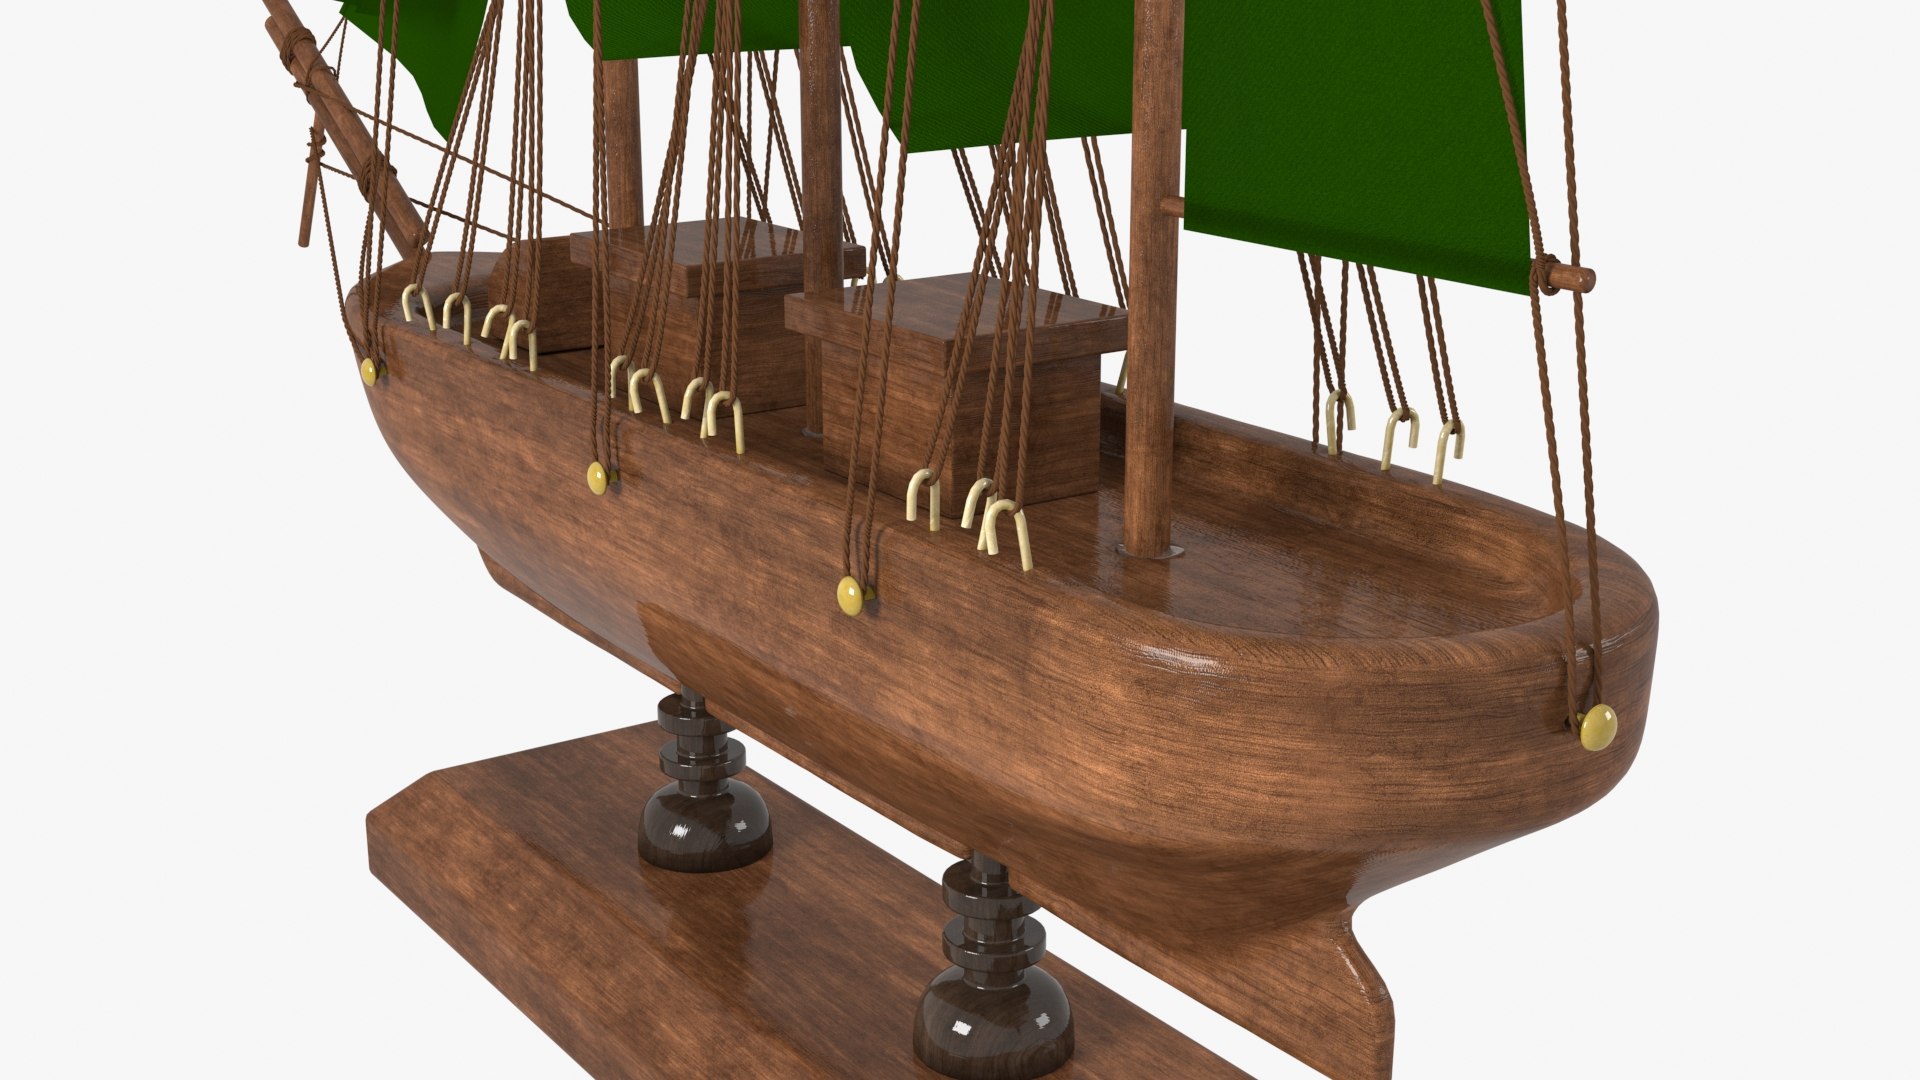 3D Wooden Decorative Ship model https://p.turbosquid.com/ts-thumb/dn/QNf8Cy/hN/2/jpg/1620710939/1920x1080/fit_q87/19333da5ccae6b5c4812e1c5fb74ed1579dffdaf/2.jpg